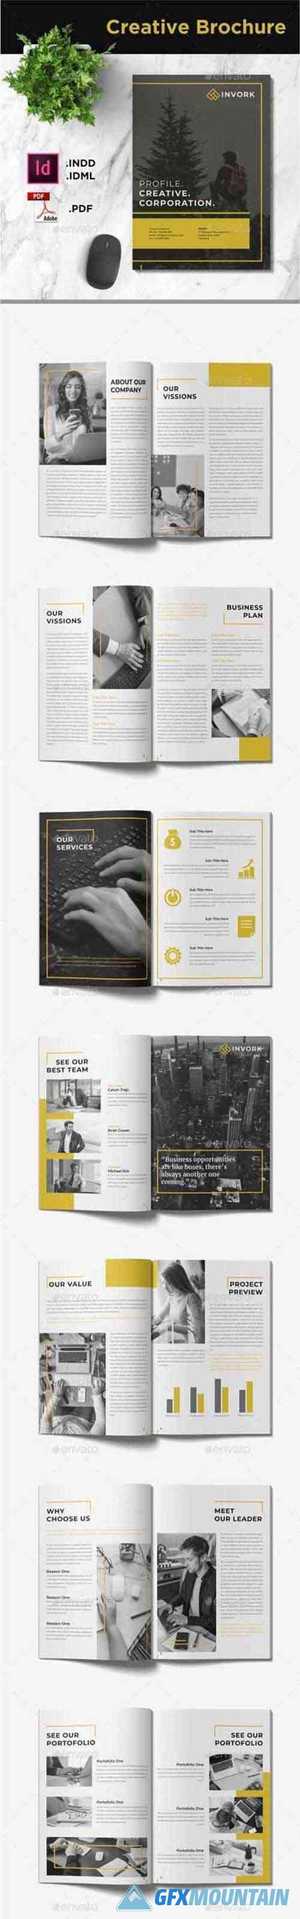 Invork - Business Brochure Template 28458511